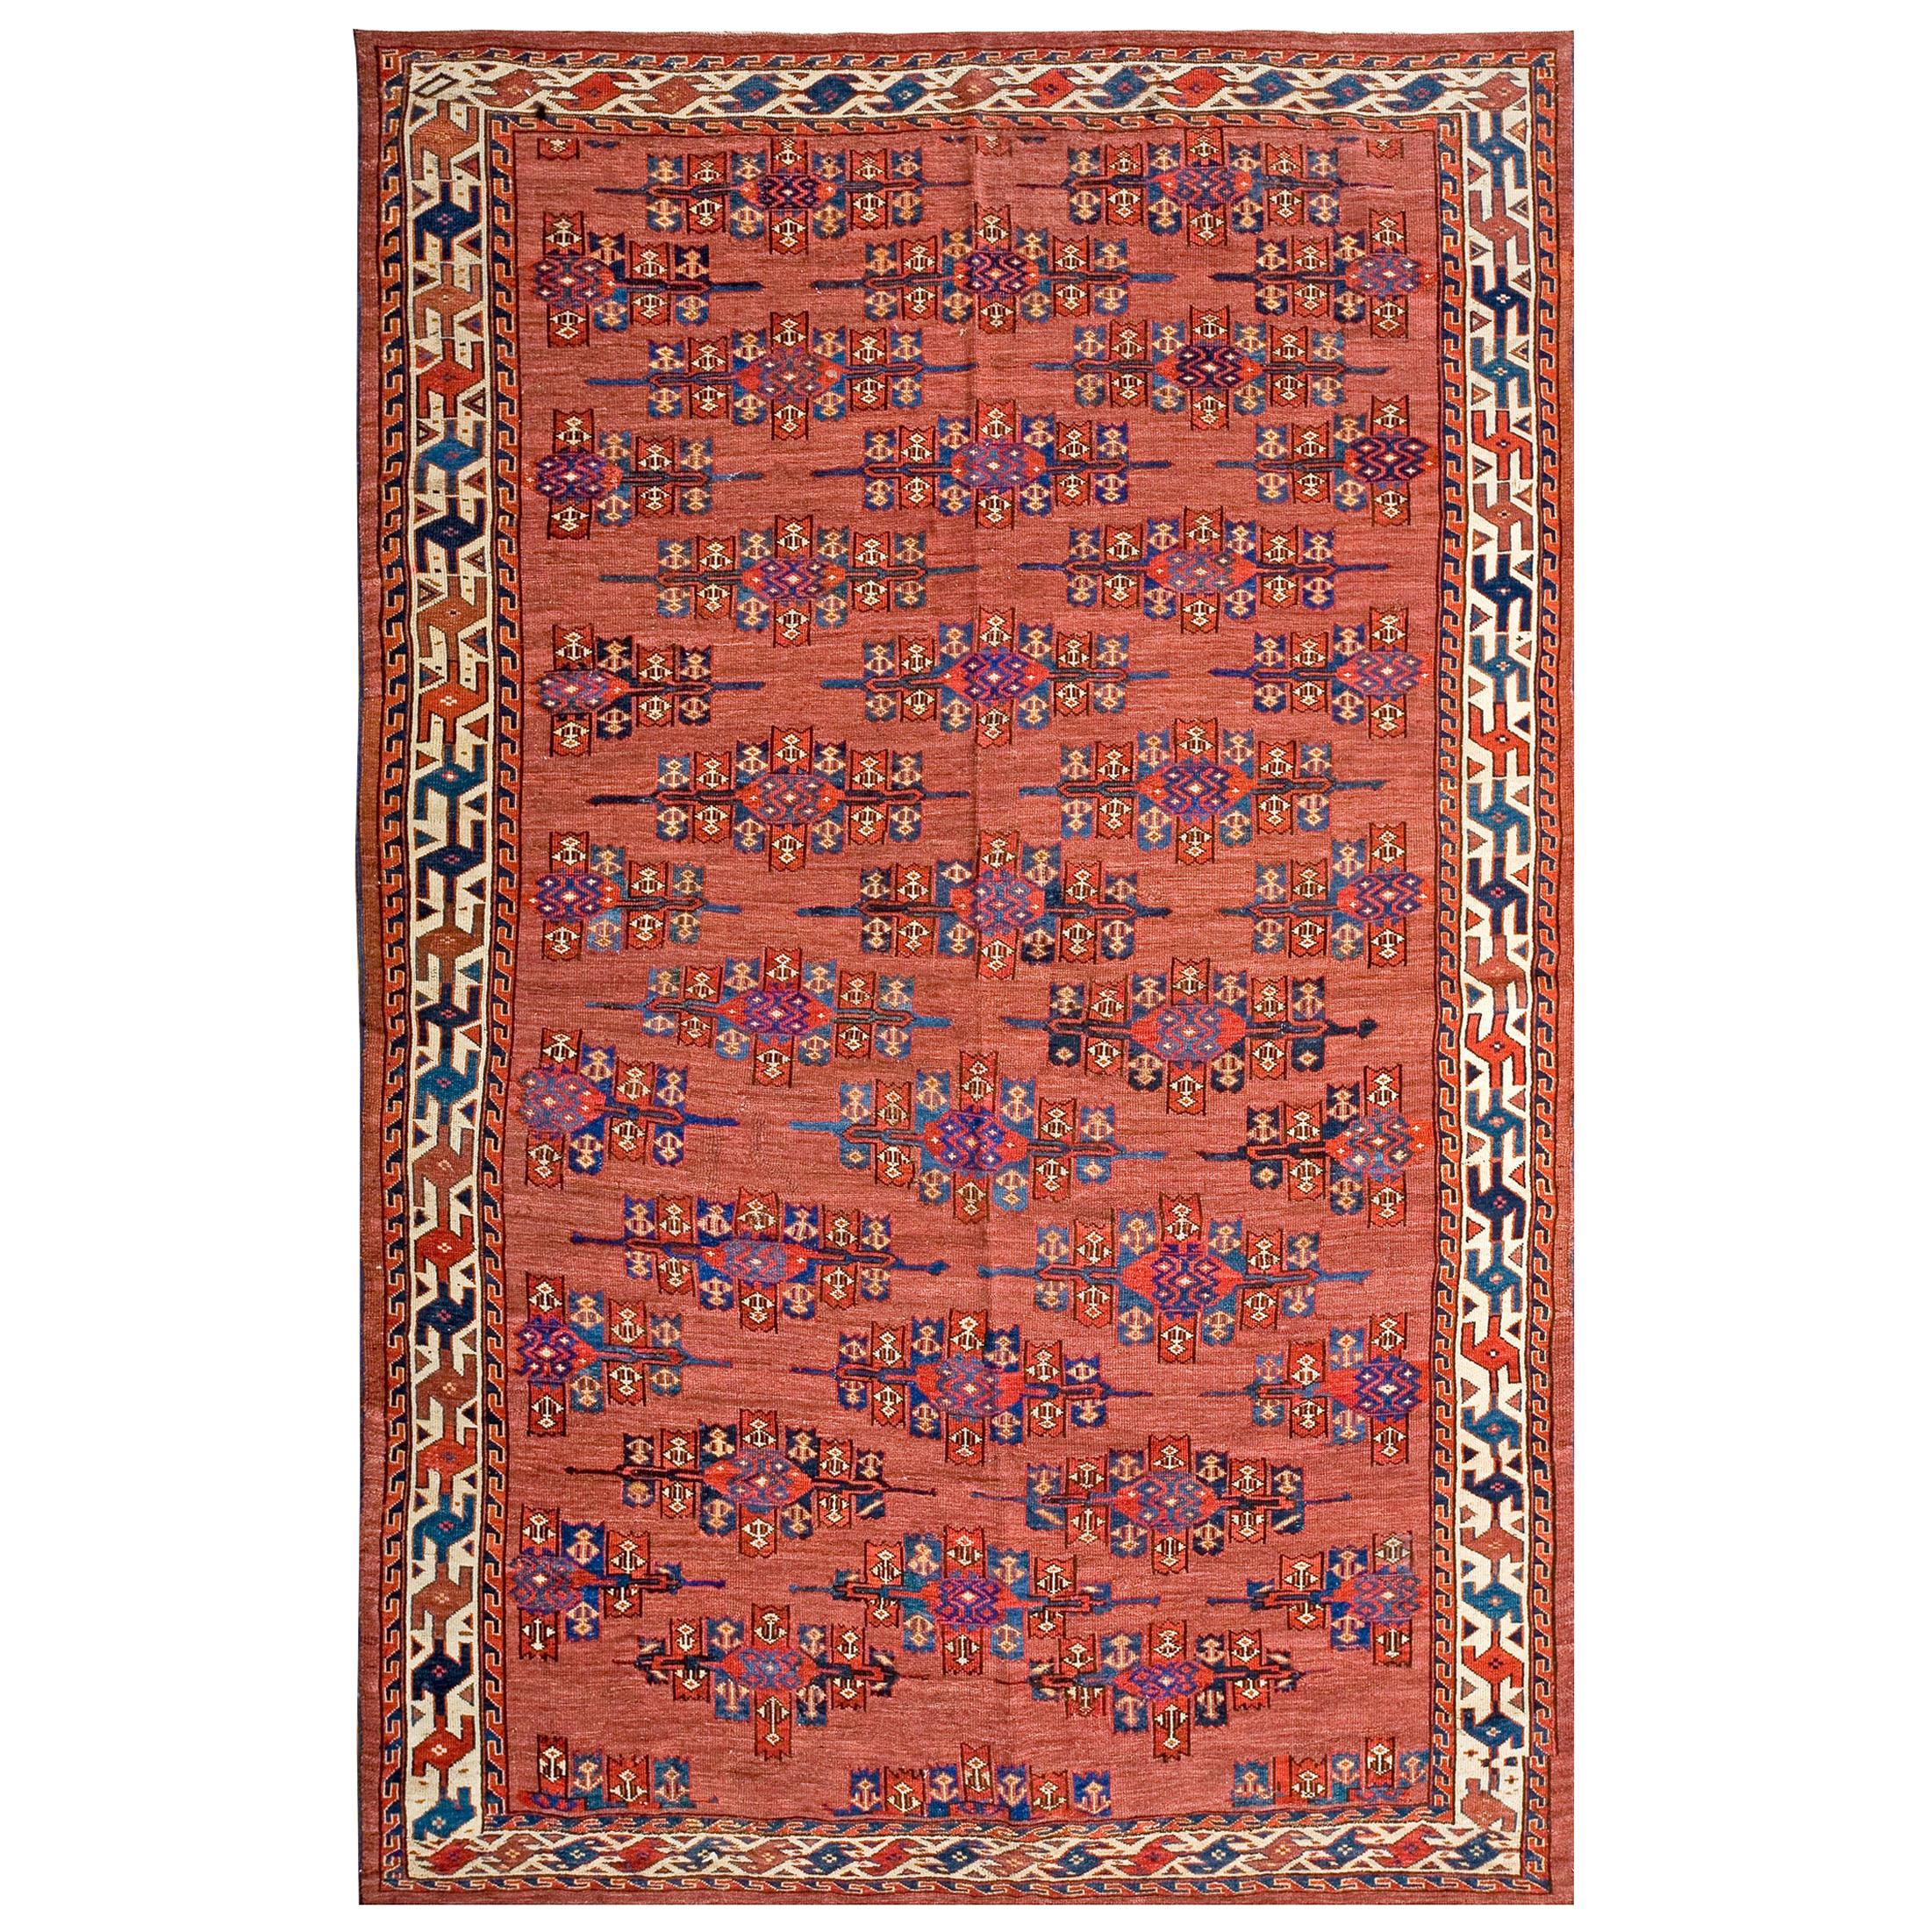 19th Century Central Asian Turkmen Yamoud Carpet ( 5'2" x 7'10" - 158 x 239 )